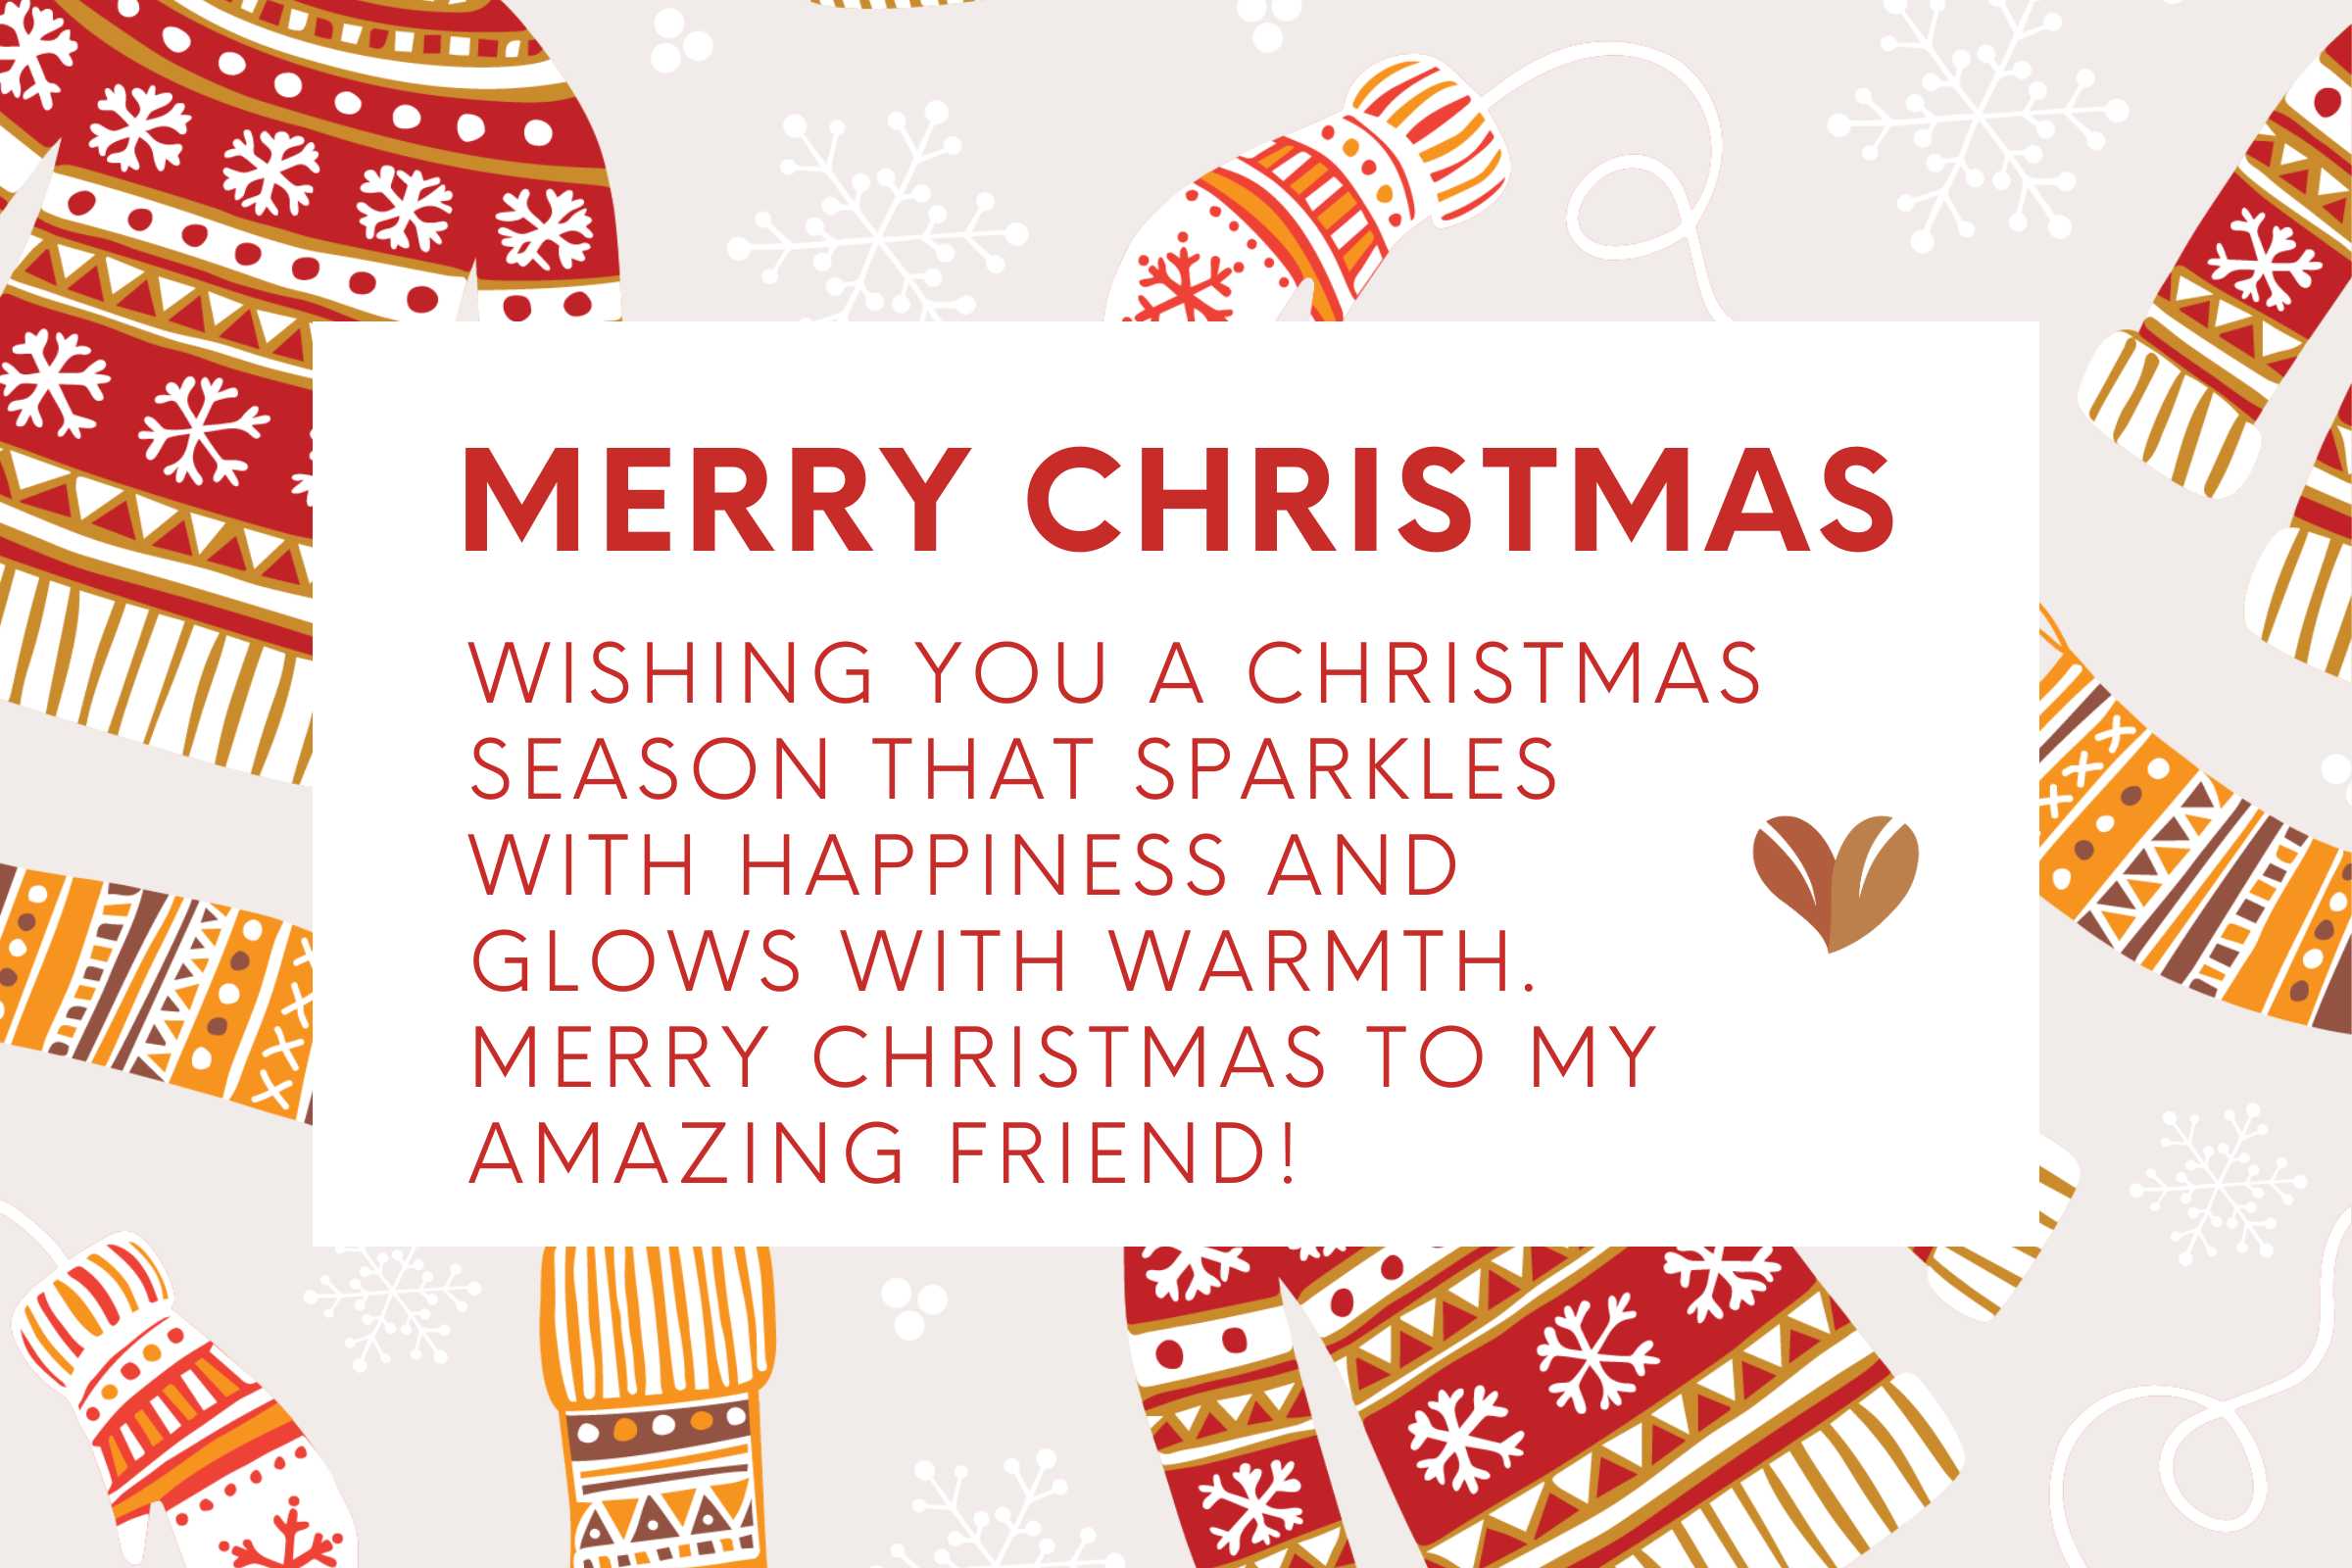 Christmas wish list and wishing you a Christmas season that sparkles with happiness